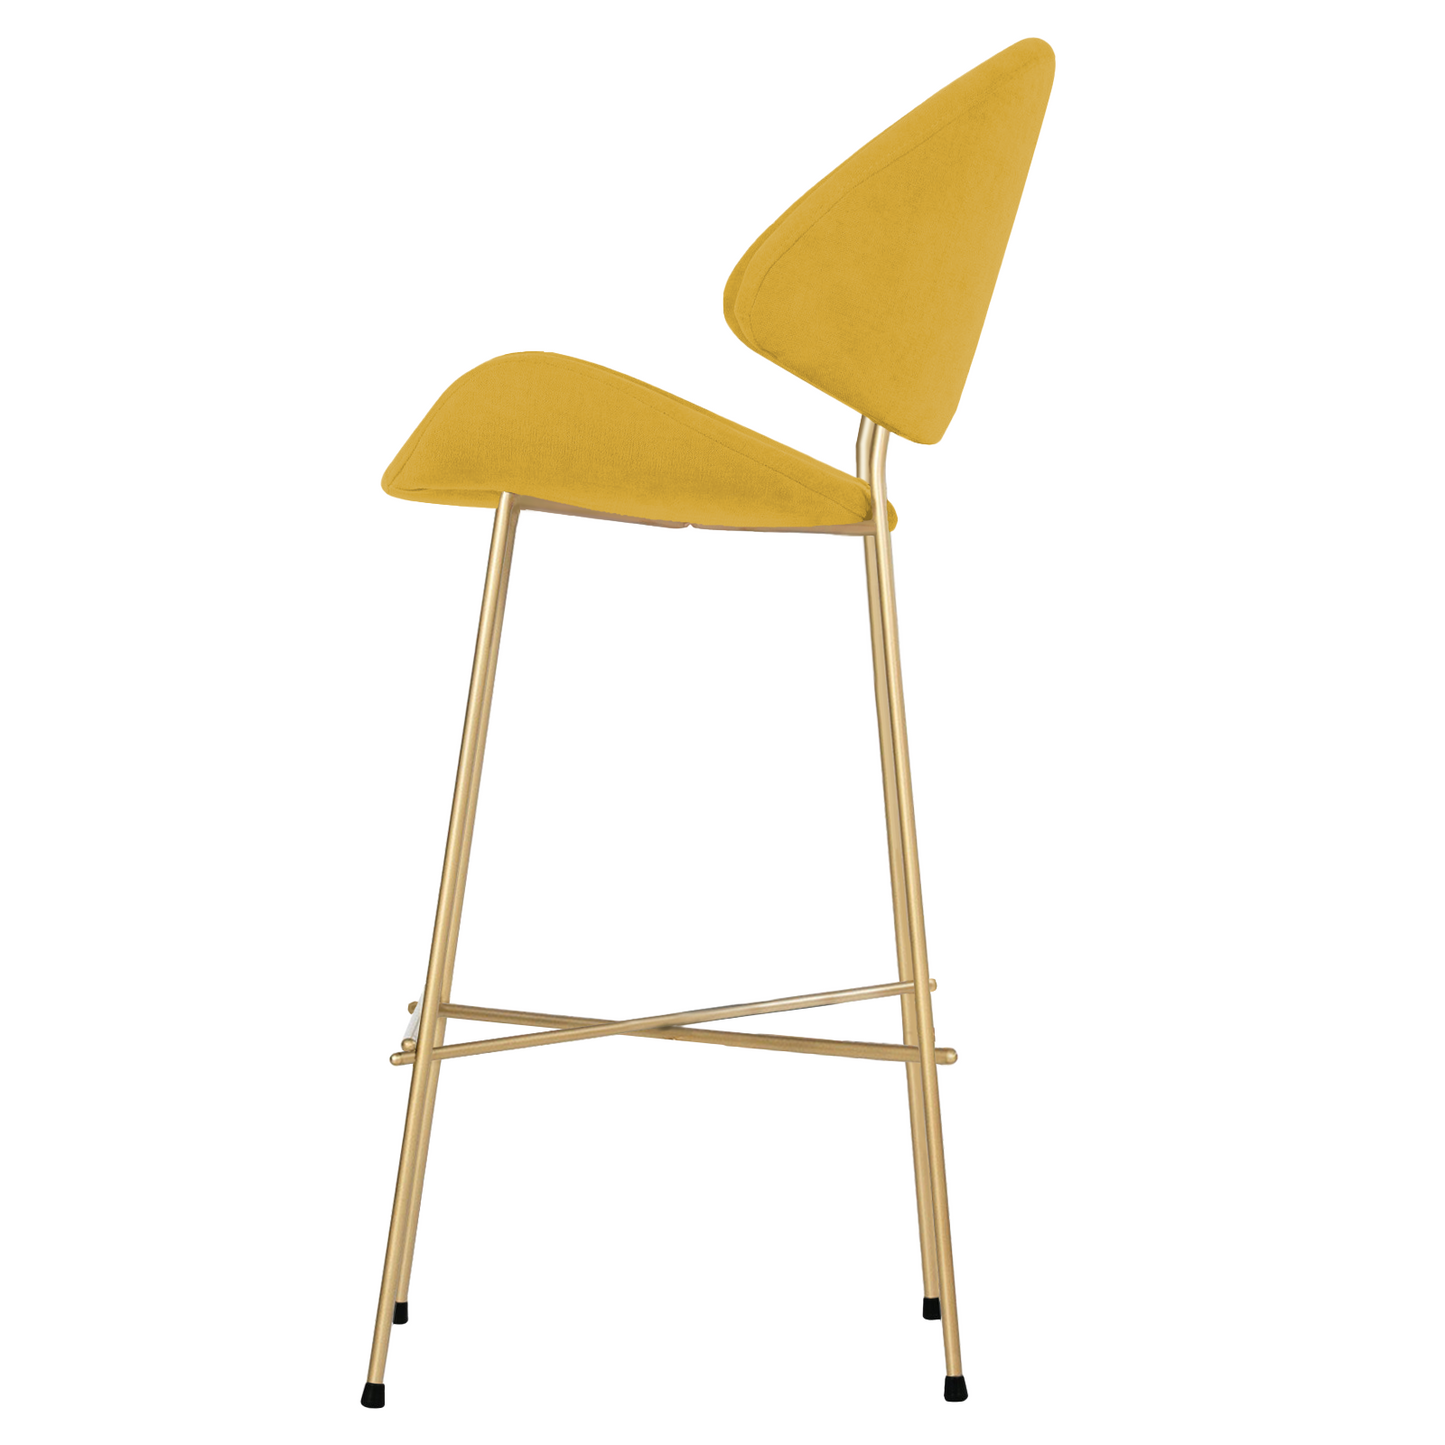 Bar stool Cheri Bar Trend Gold High - Mustard